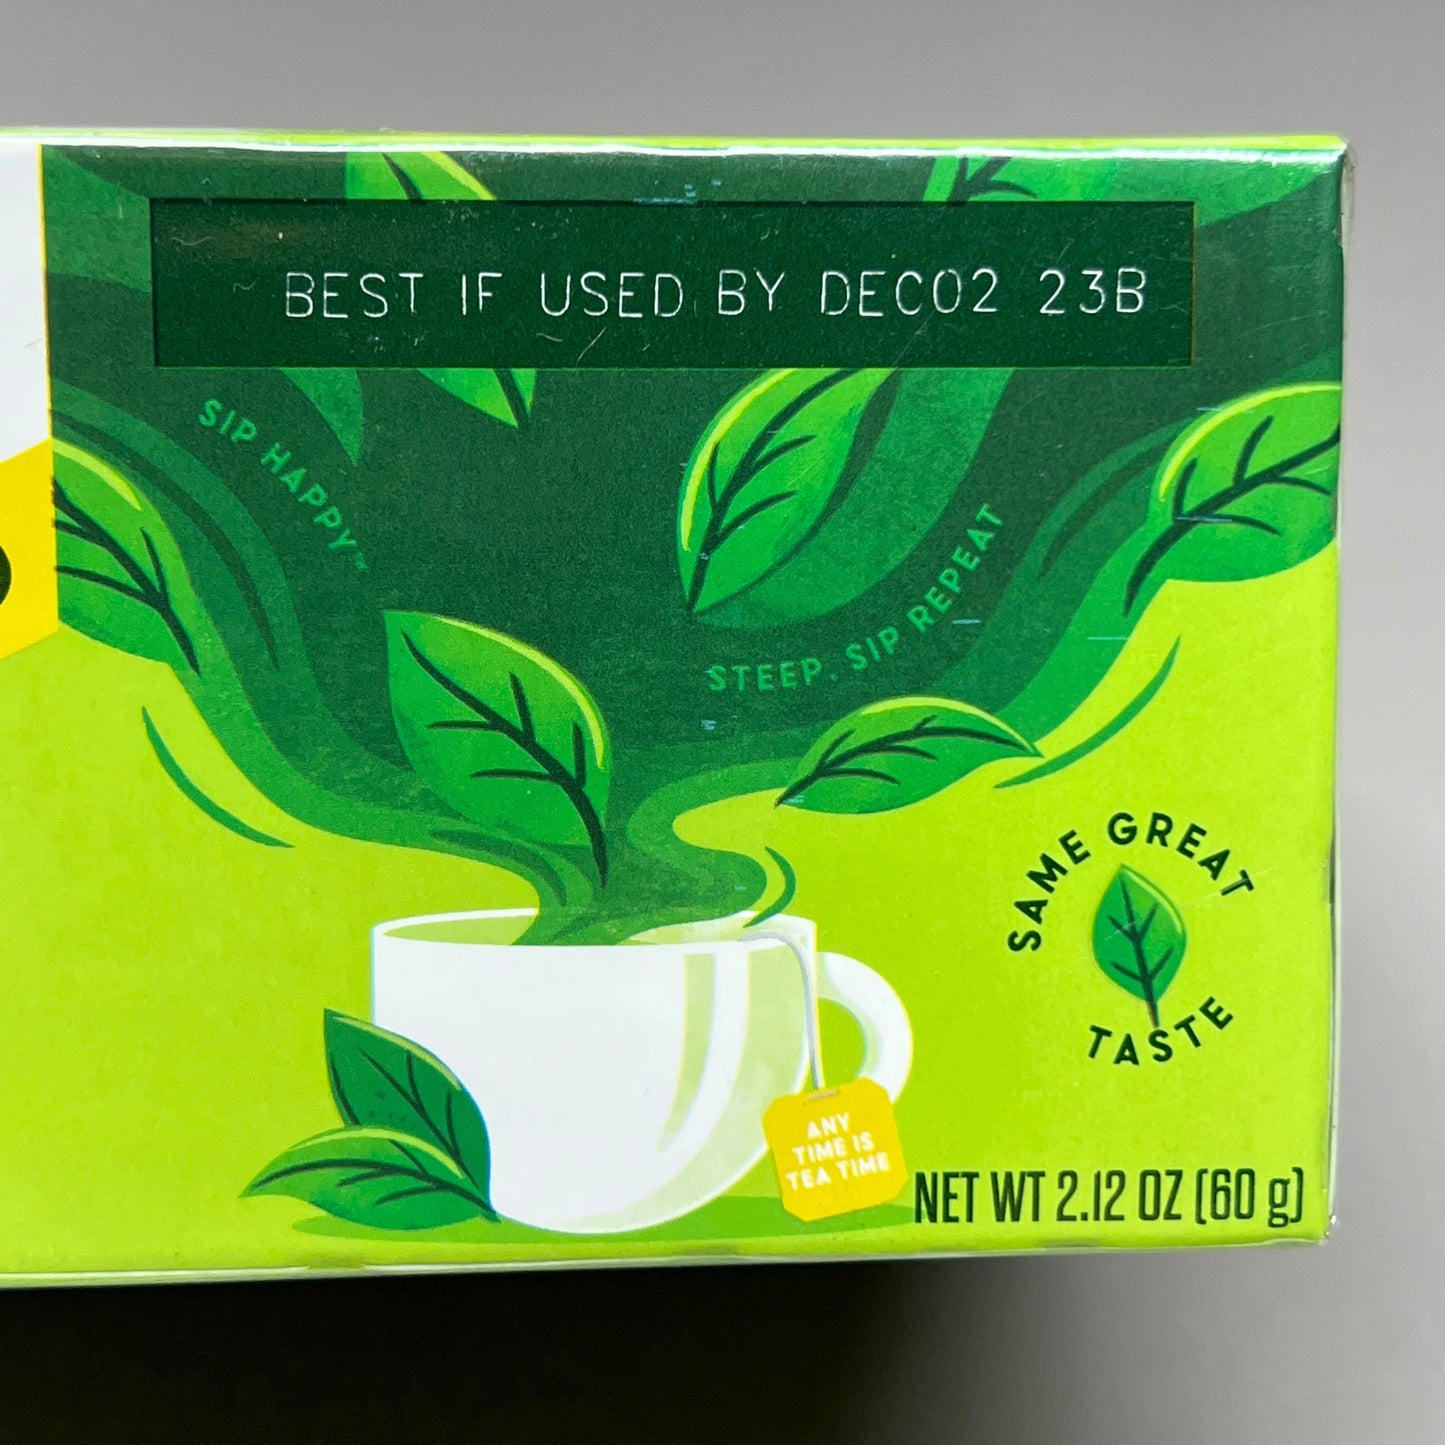 ZA@ SALADA Decaffeinated Classic Green Tea 40 Count Bags BB Dec 2023 (AS-IS) D